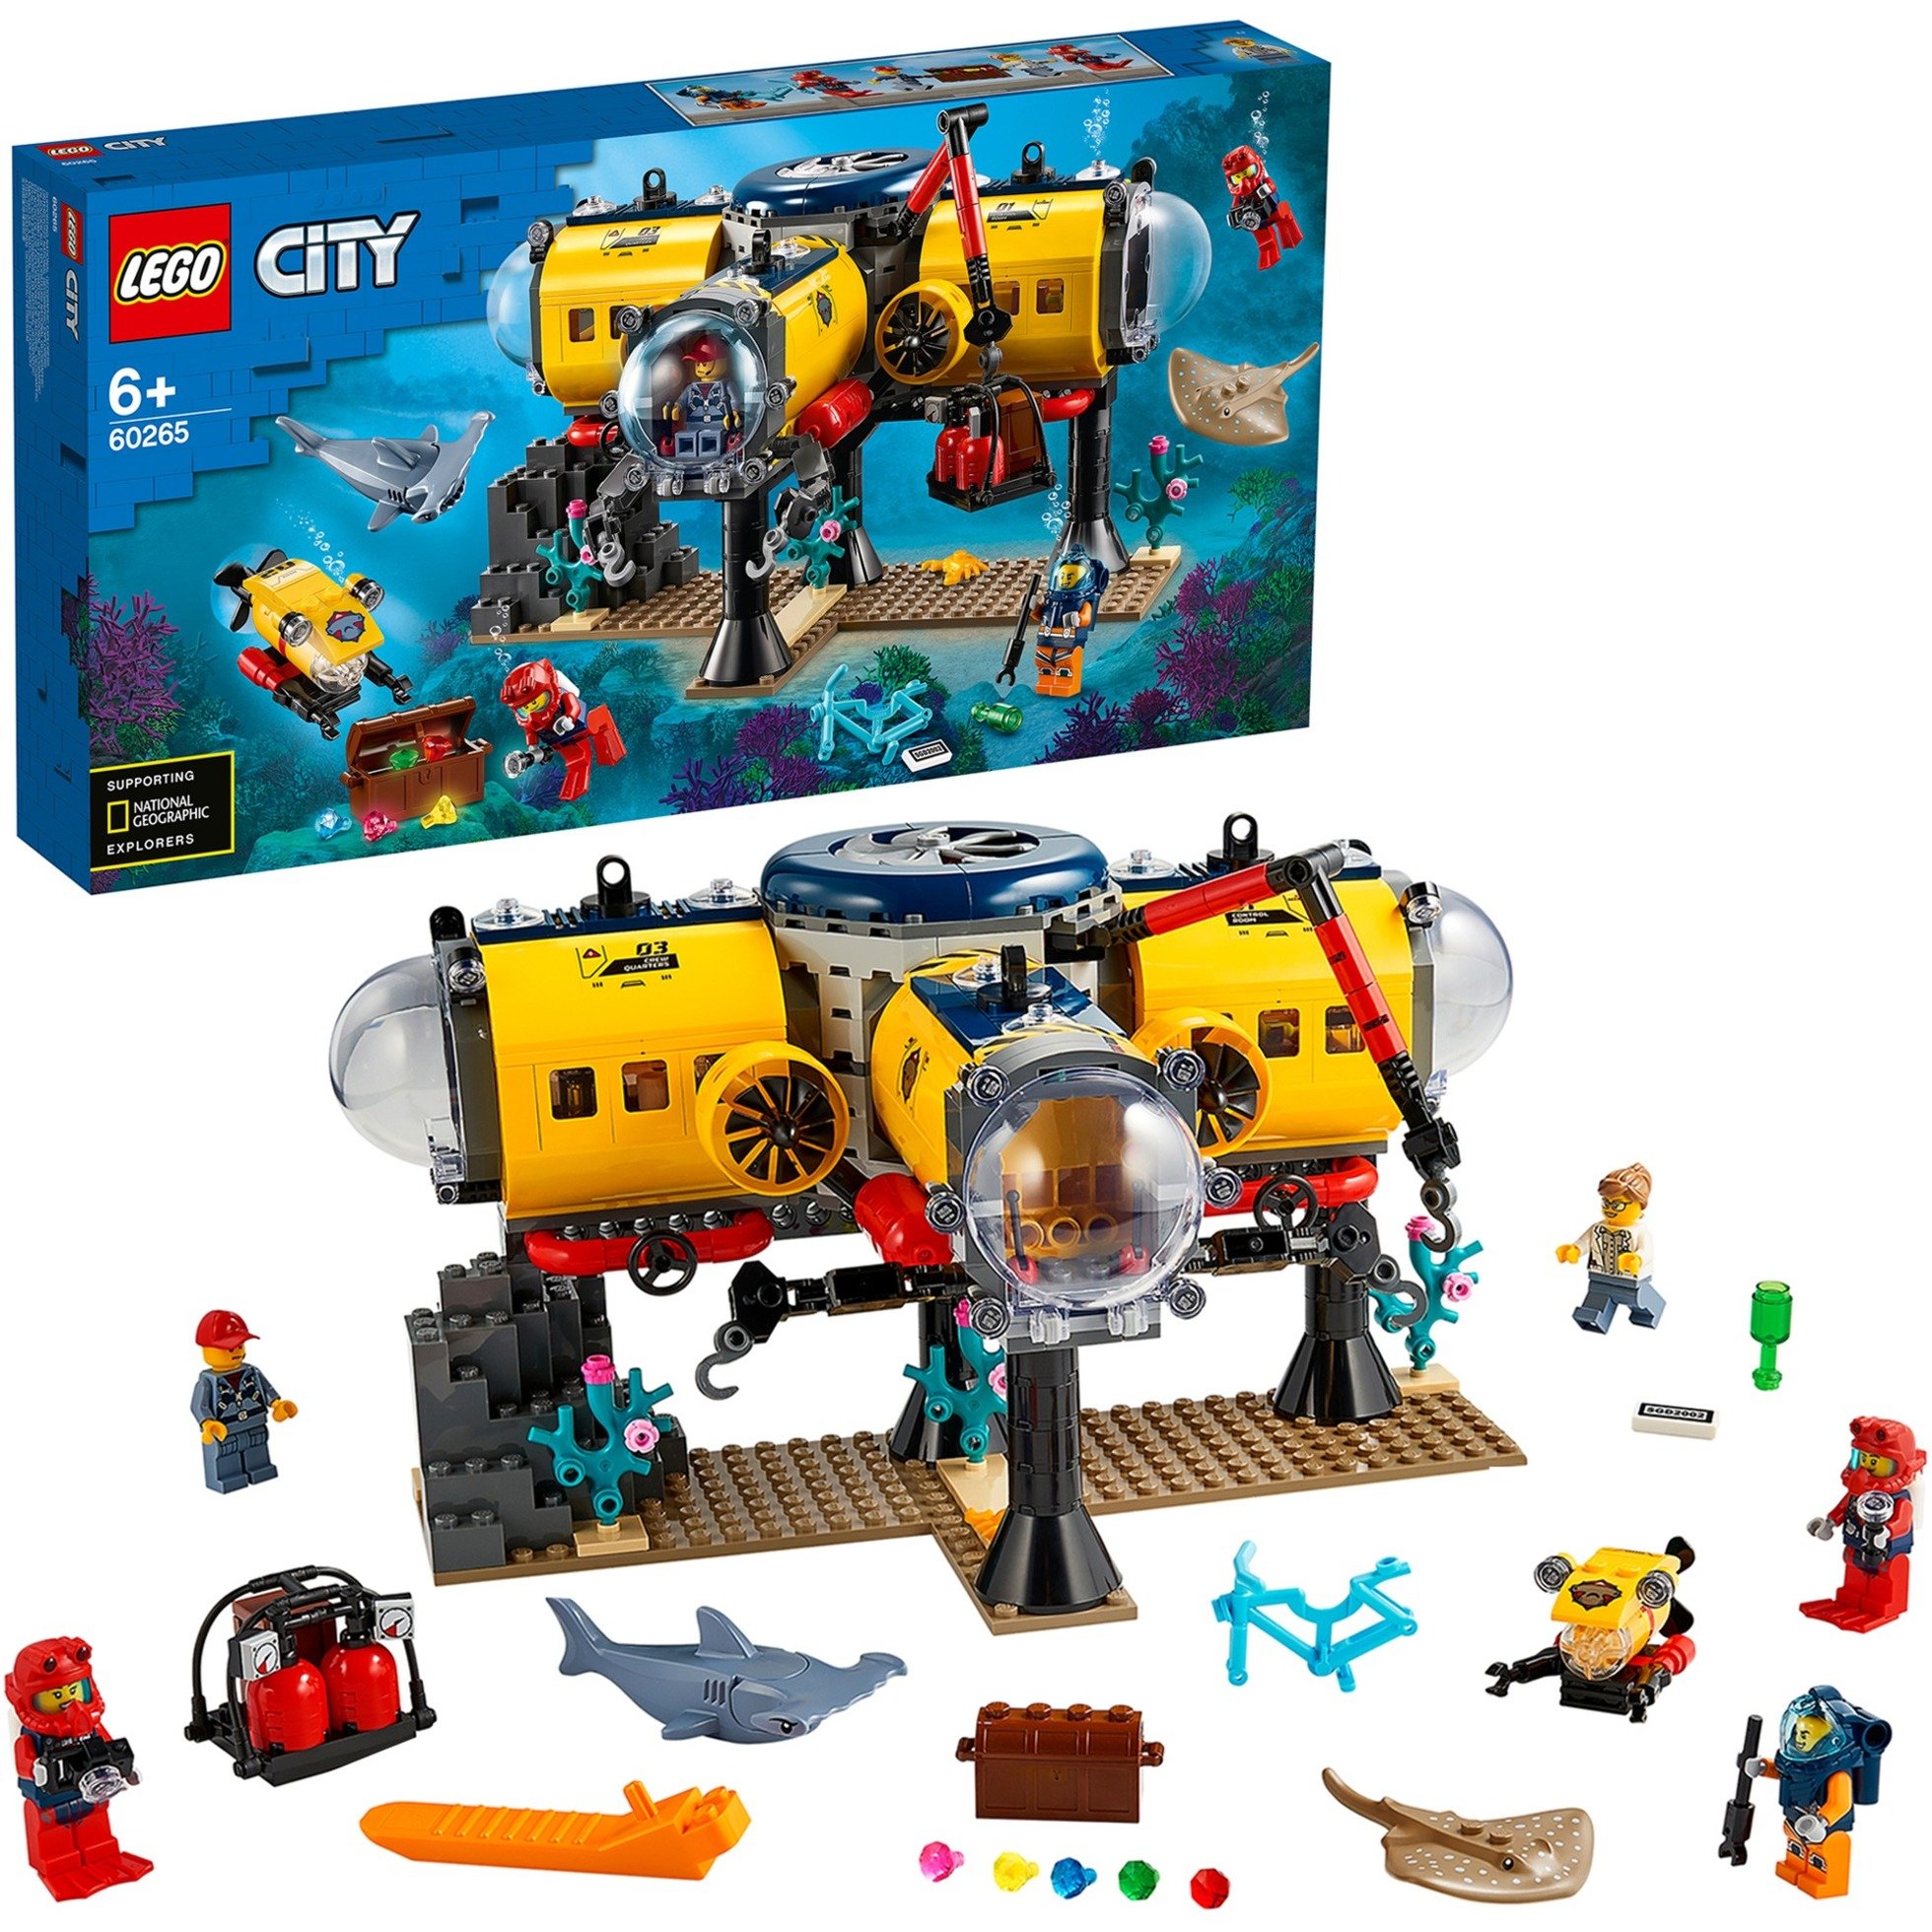 Spielzeug: Lego 60265 City Meeresforschungsbasis